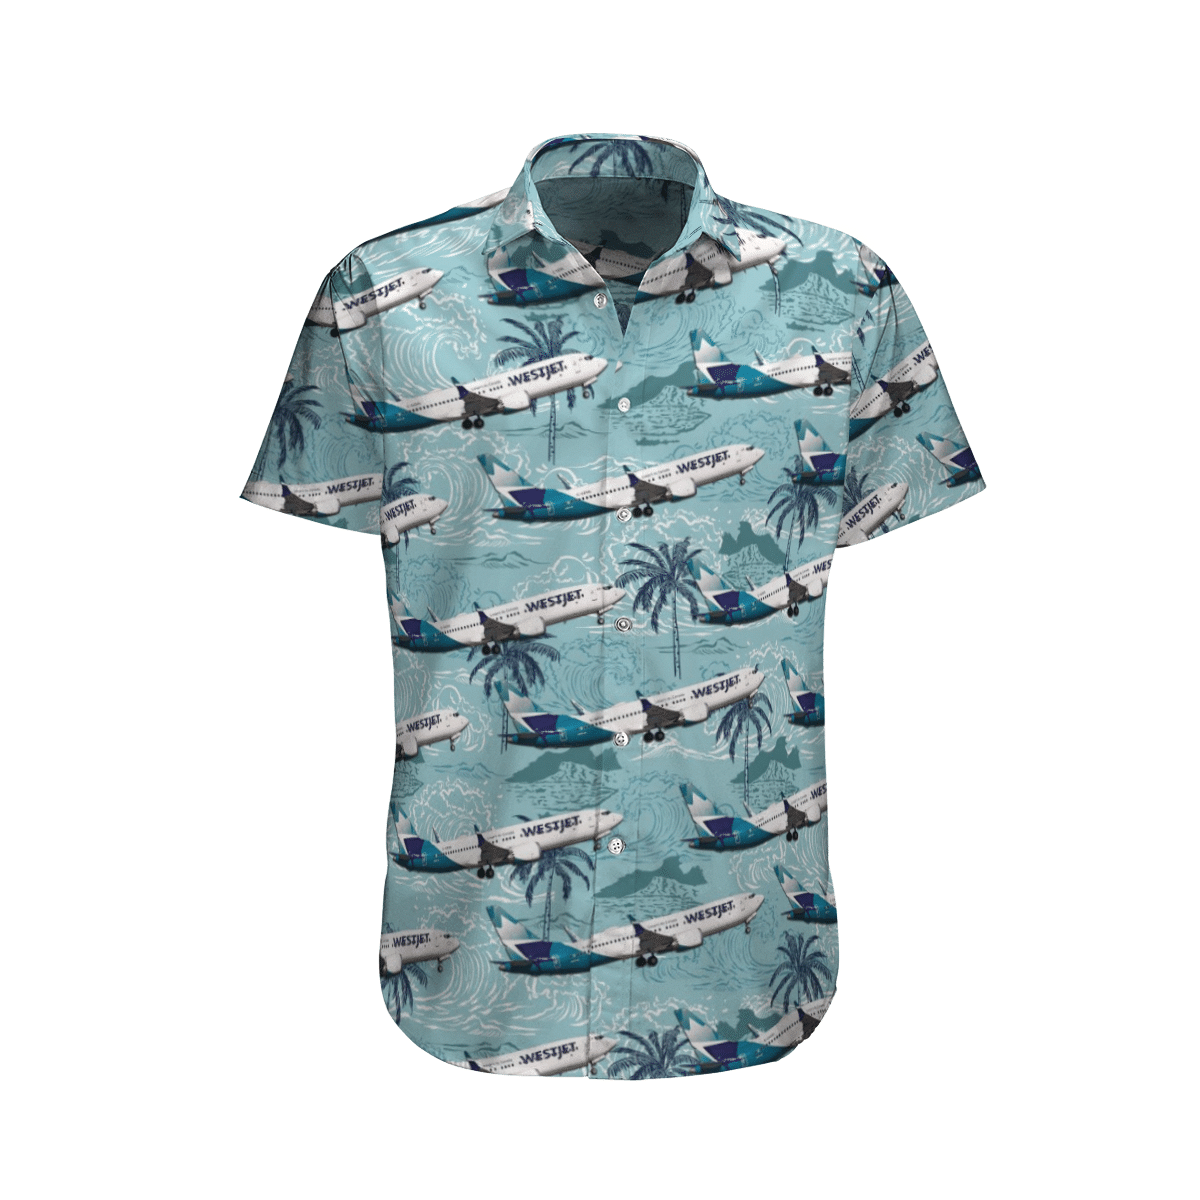 Enjoy your summer with top cool hawaiian shirt below 37